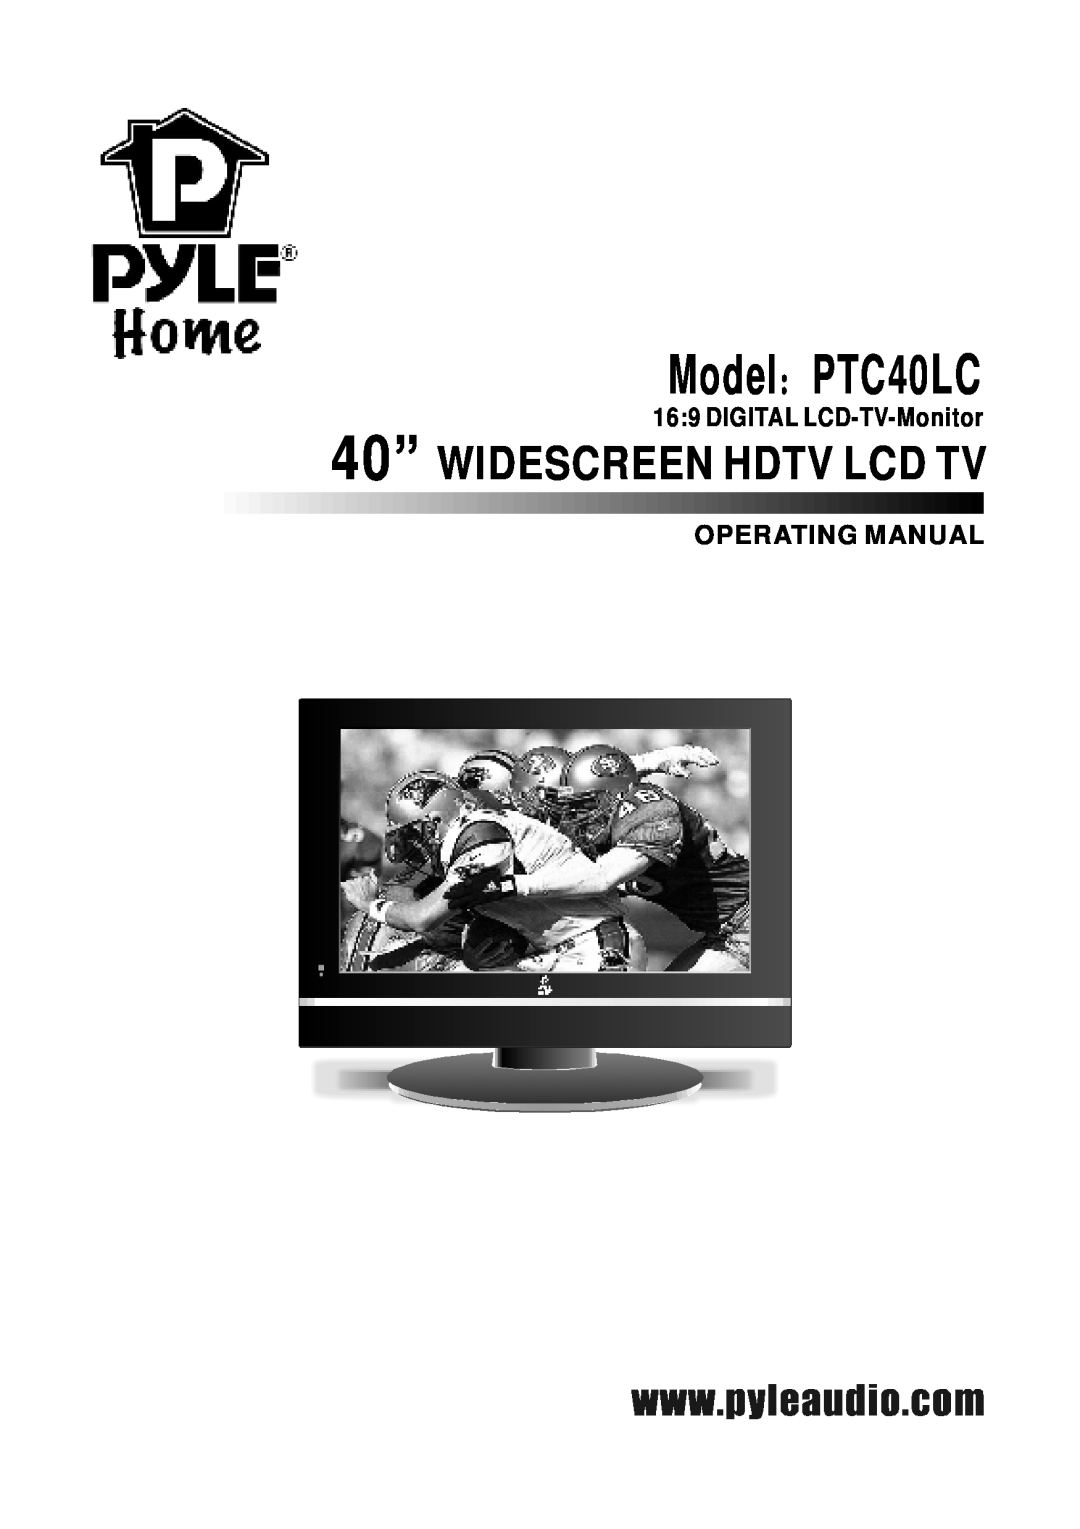 PYLE Audio manual DIGITAL LCD-TV-Monitor, Operating Manual, Model：PTC40LC, 40” WIDESCREEN HDTV LCD TV 